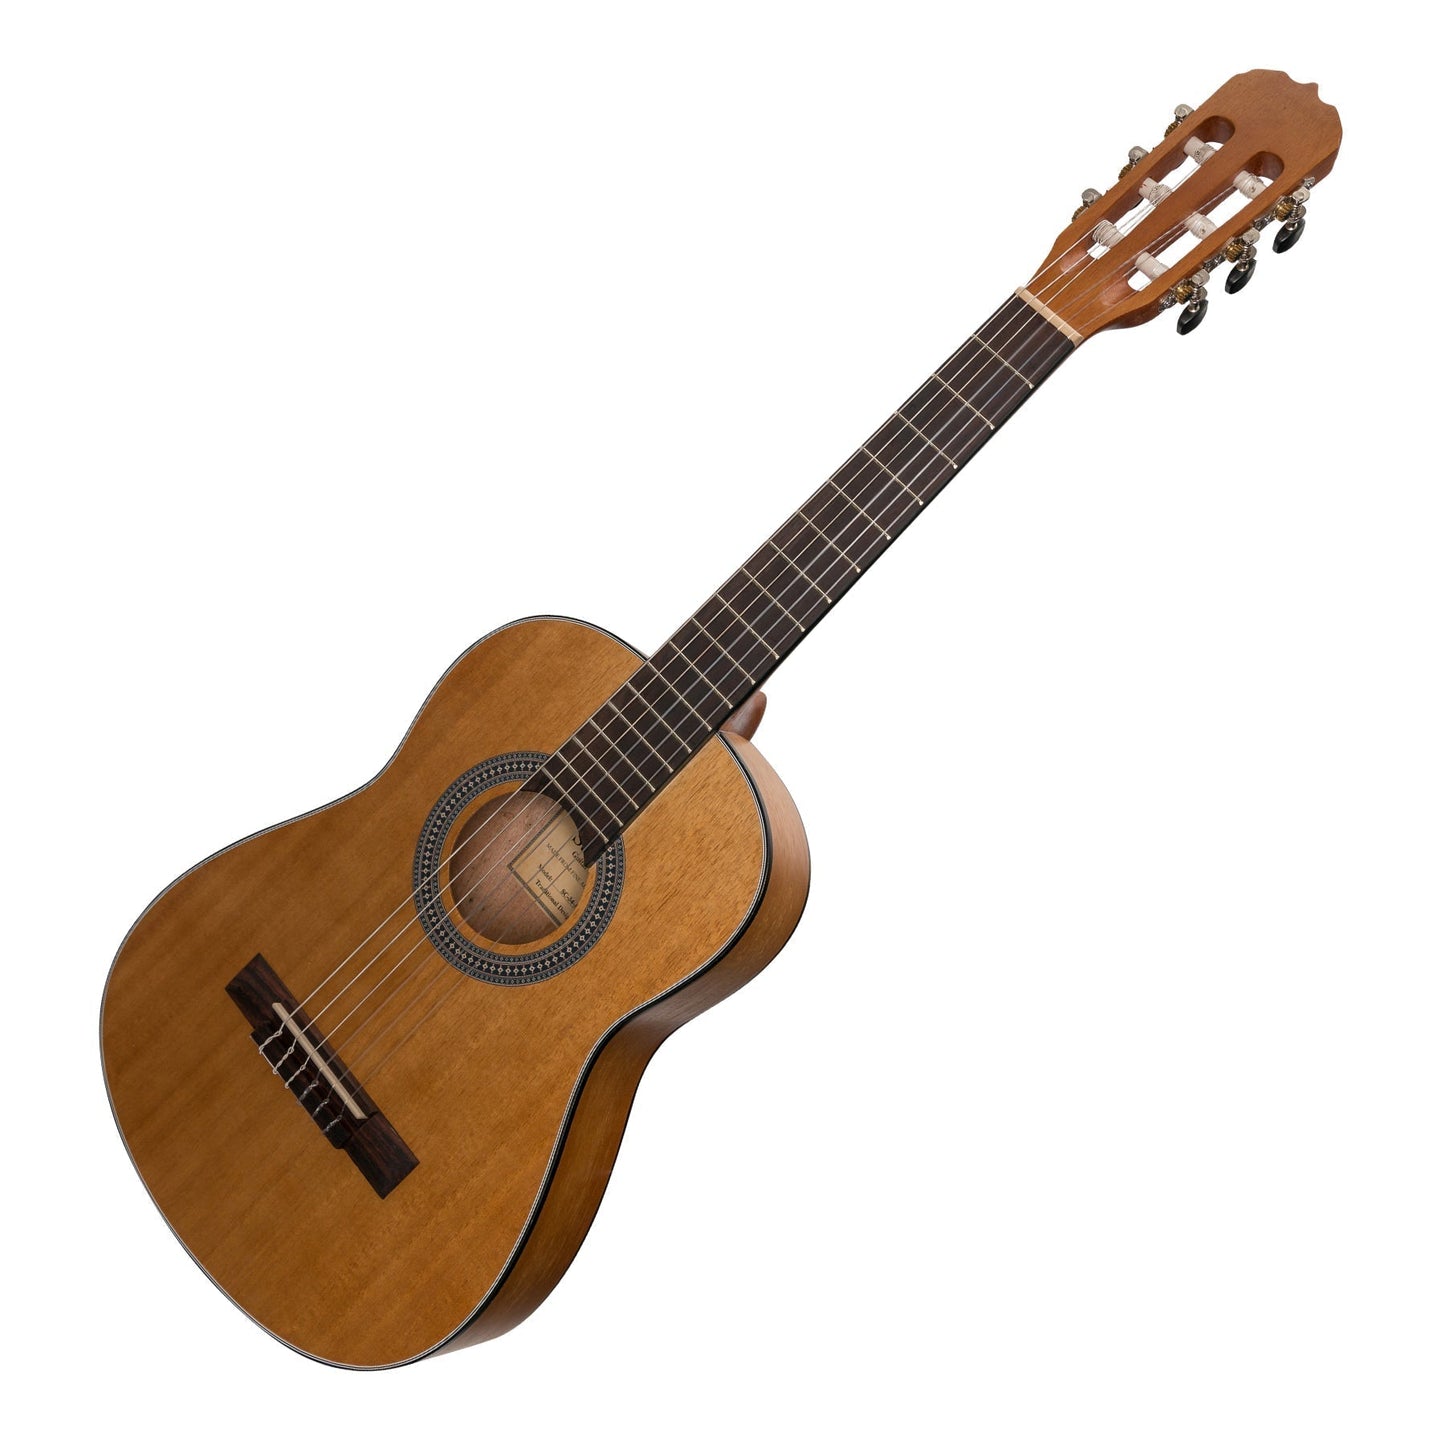 Sanchez 1/2 Size Student Classical Guitar Pack (Acacia)